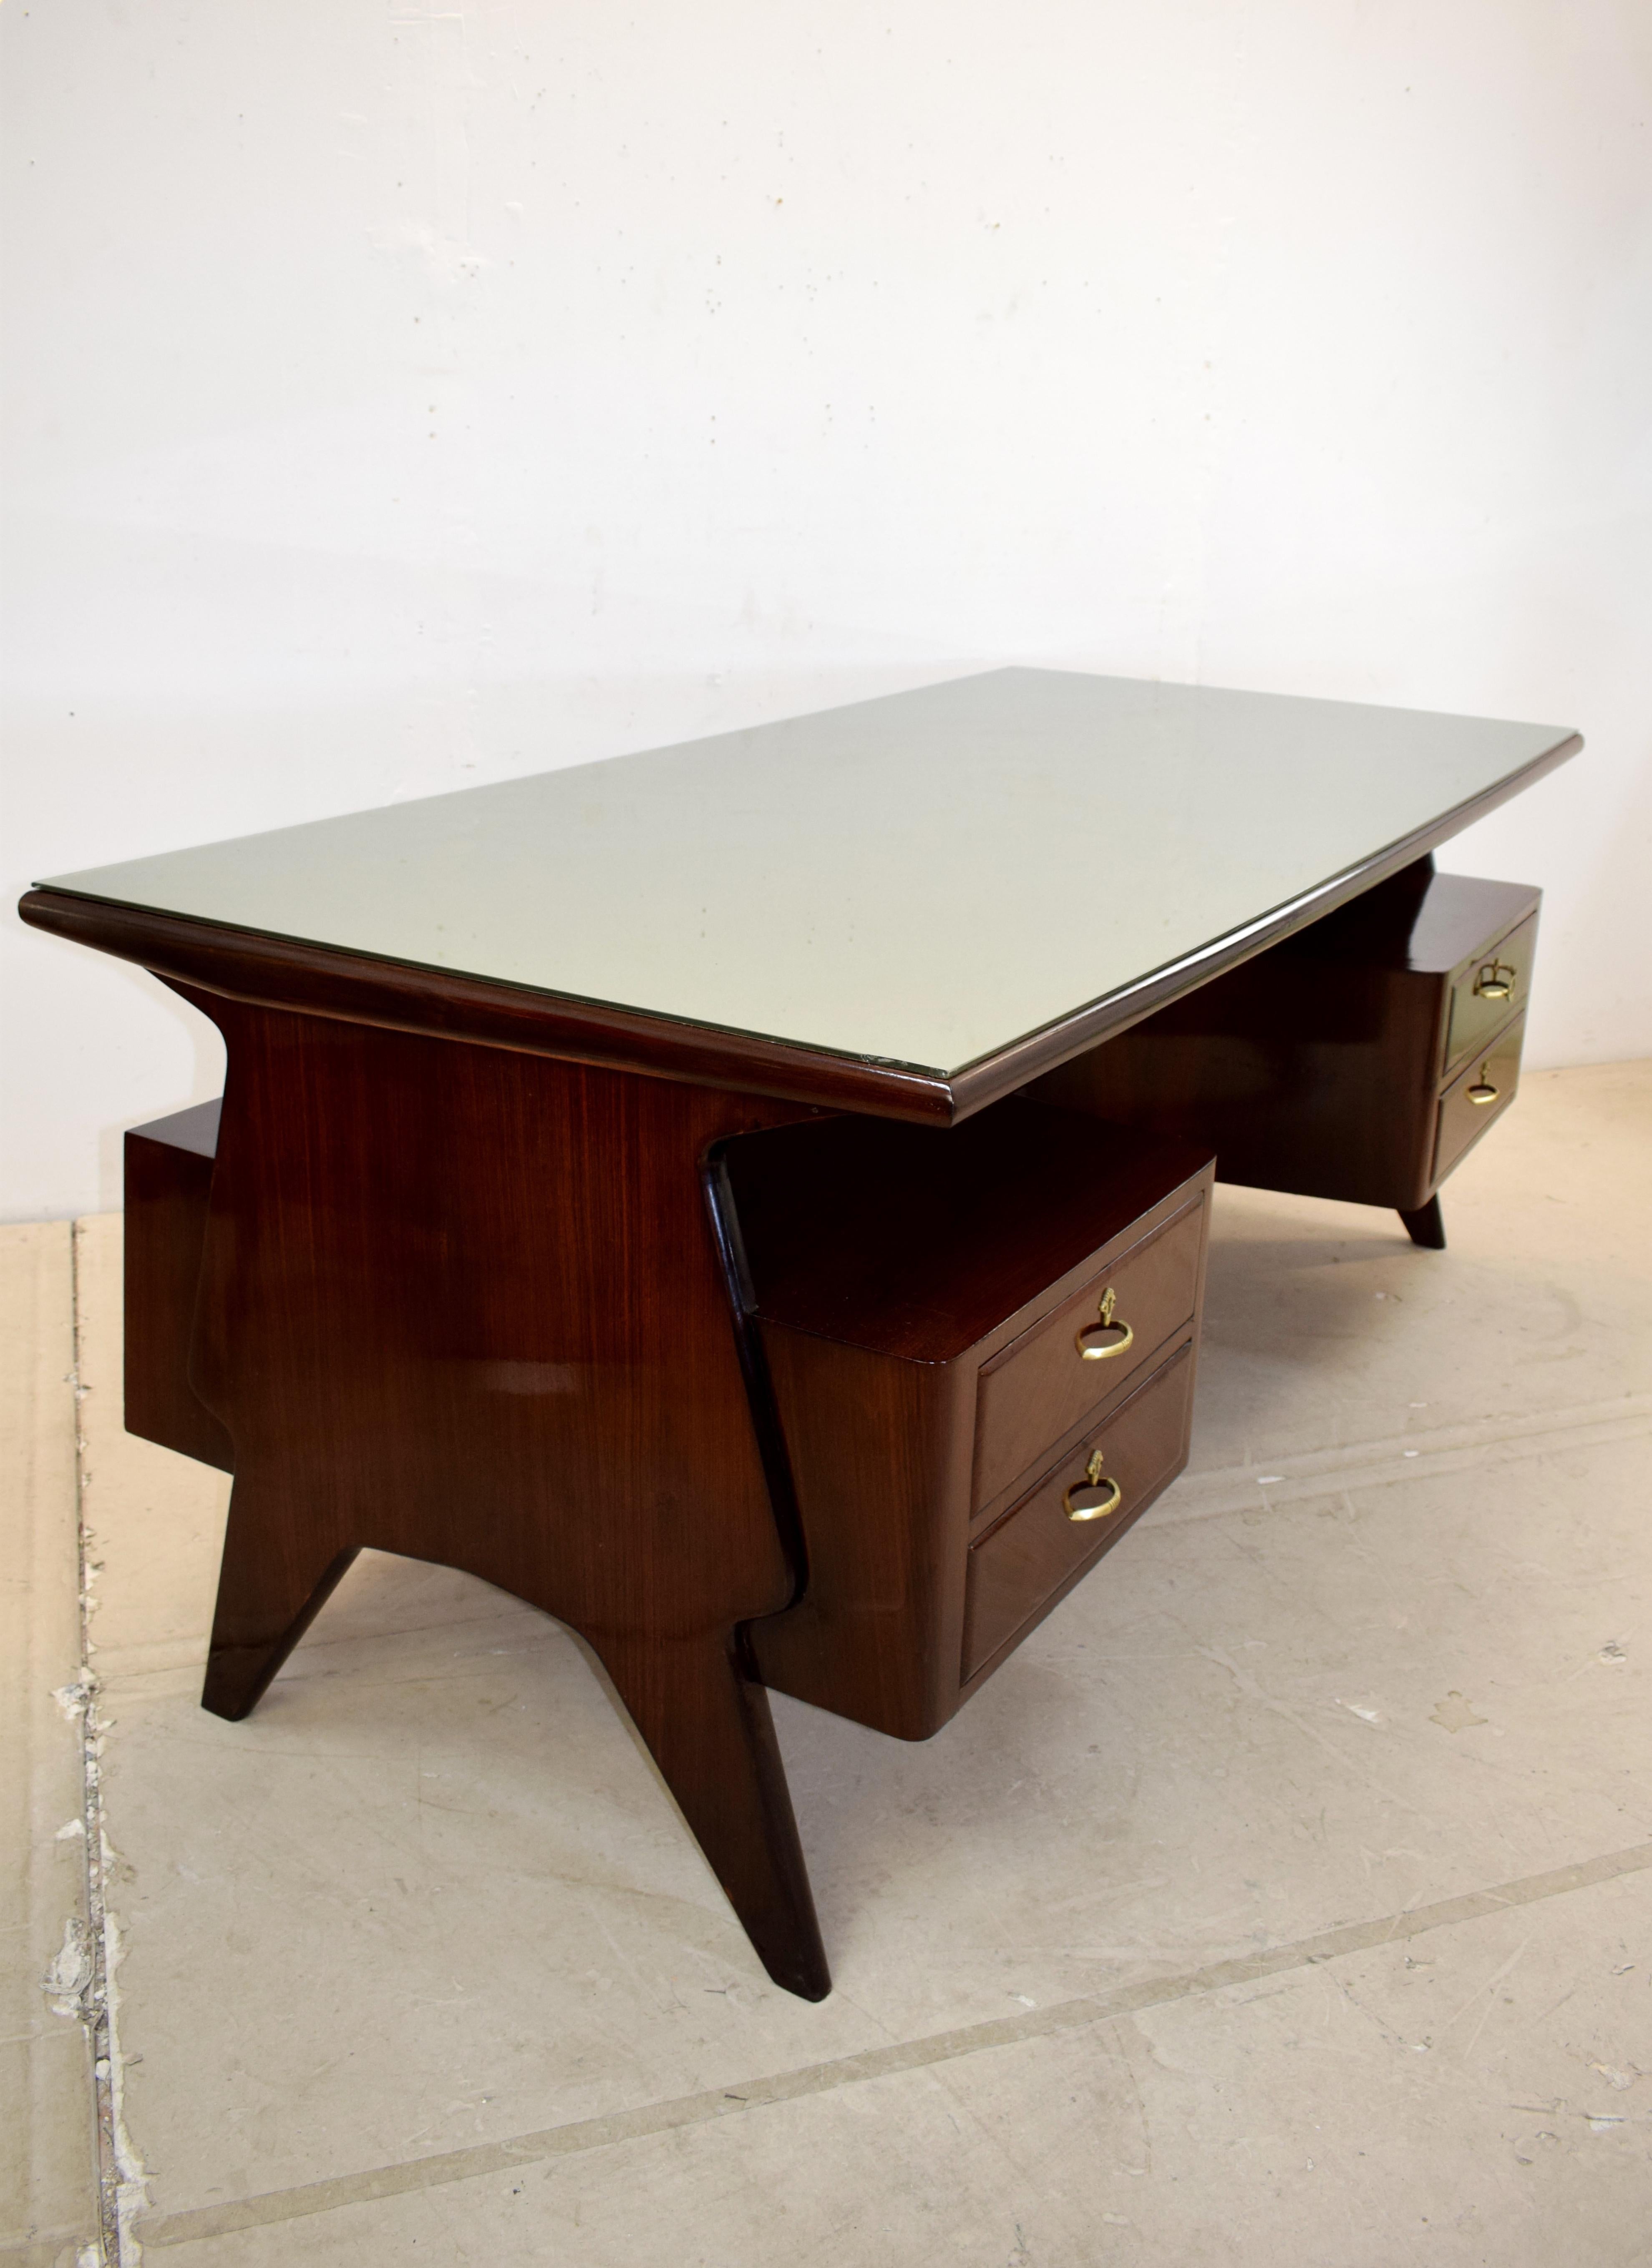 Italian desk, 1950s.
Dimensions: H=80 cm; W=185 cm; D= 90 cm.